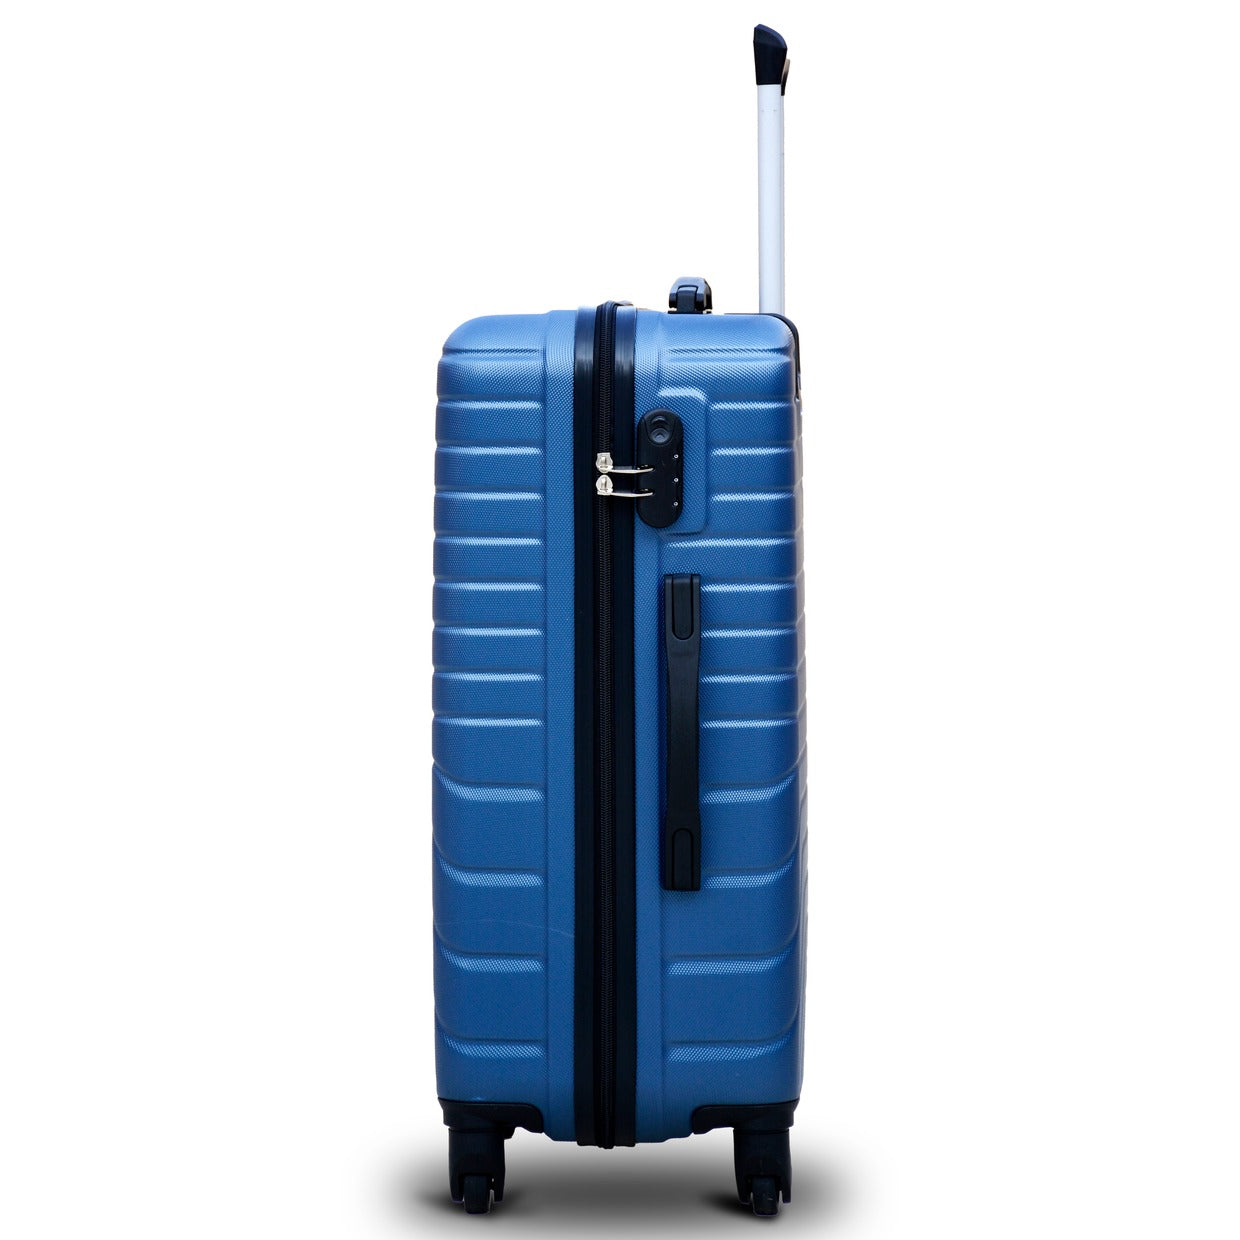 28" Blue Colour SJ ABS Luggage Lightweight Hard Case Trolley Bag